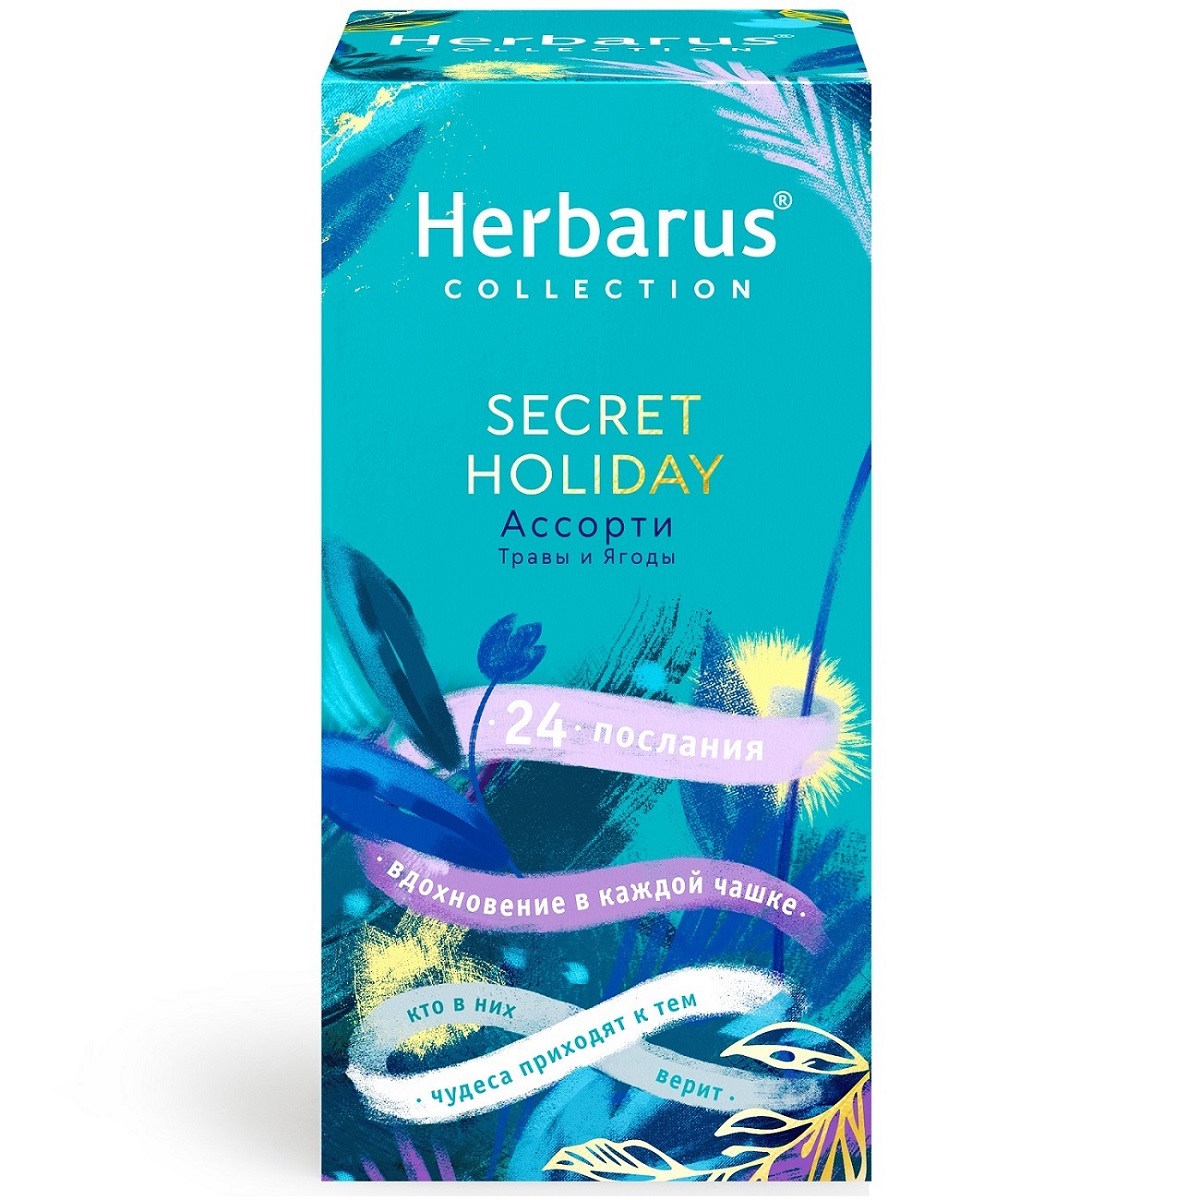 Herbarus Чайный напиток ассорти Secret Holiday, 24 пакетика (Herbarus, Травы и ягоды) чайный напиток herbarus ассорти травы и ягоды 24 пакетиков